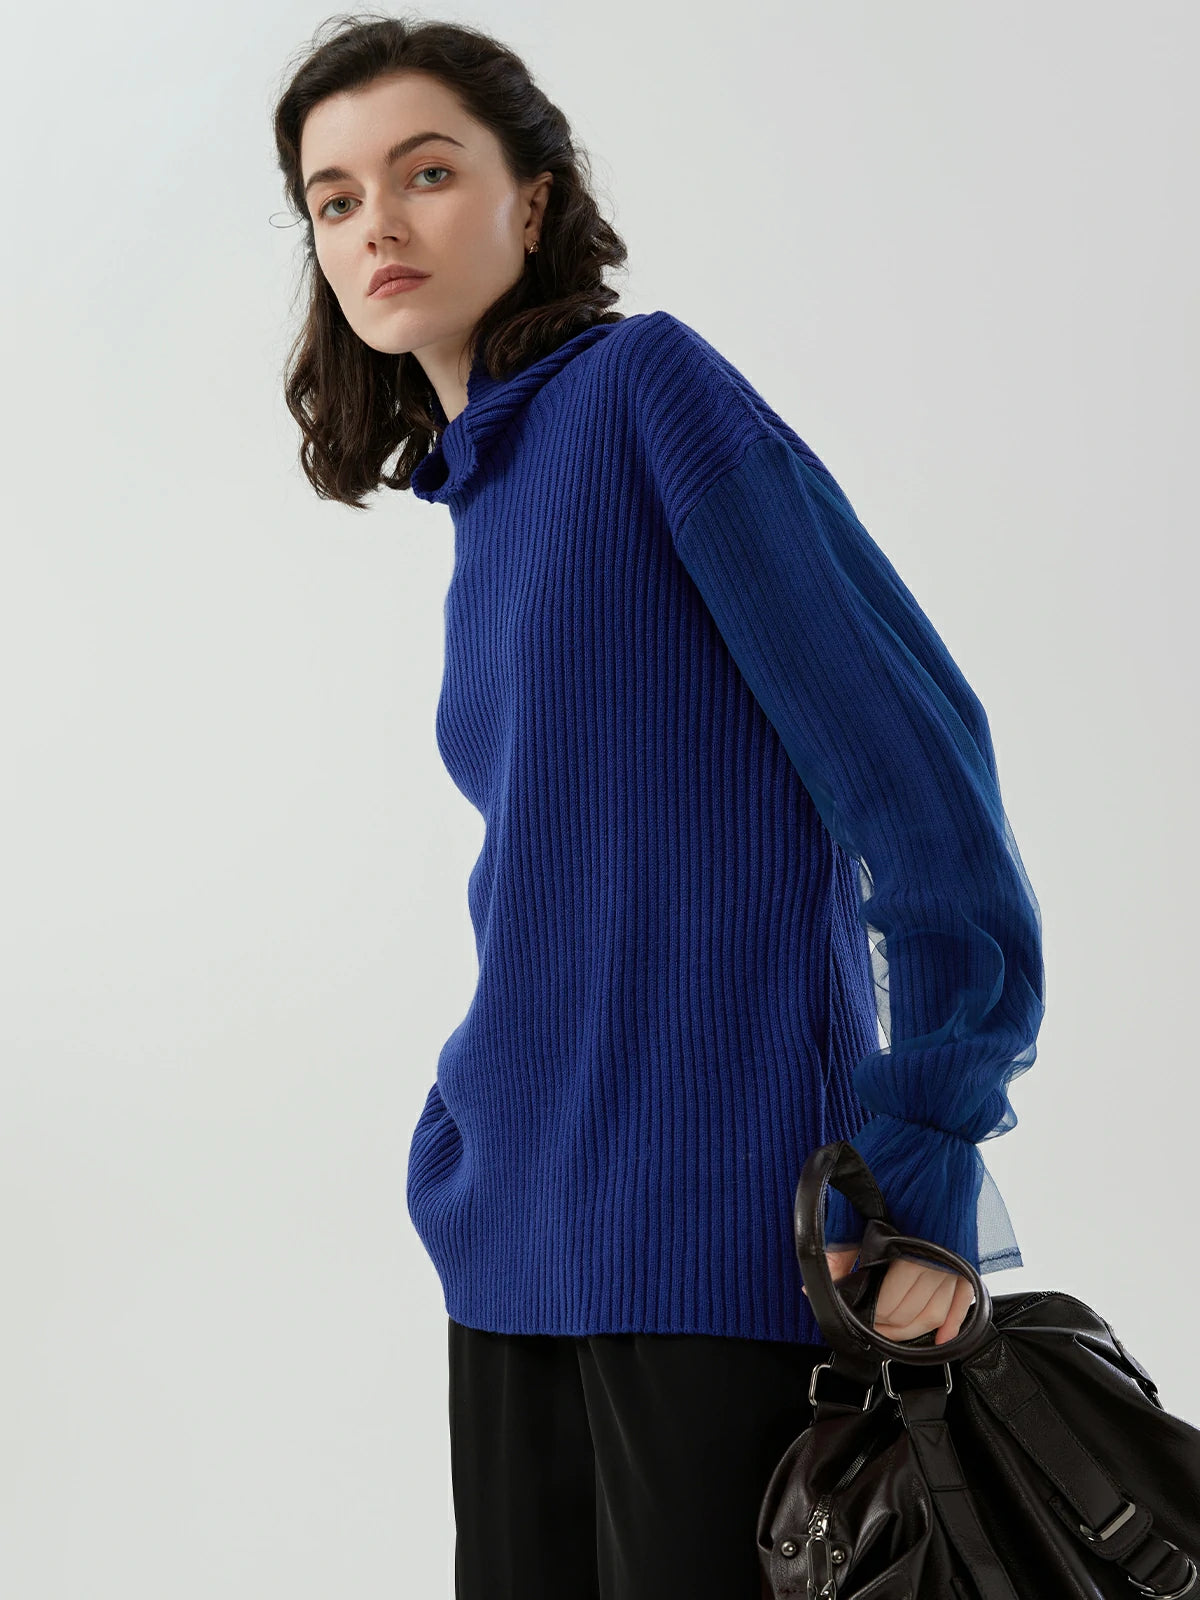 Elegant turtleneck sweater featuring mesh detail for style versatility